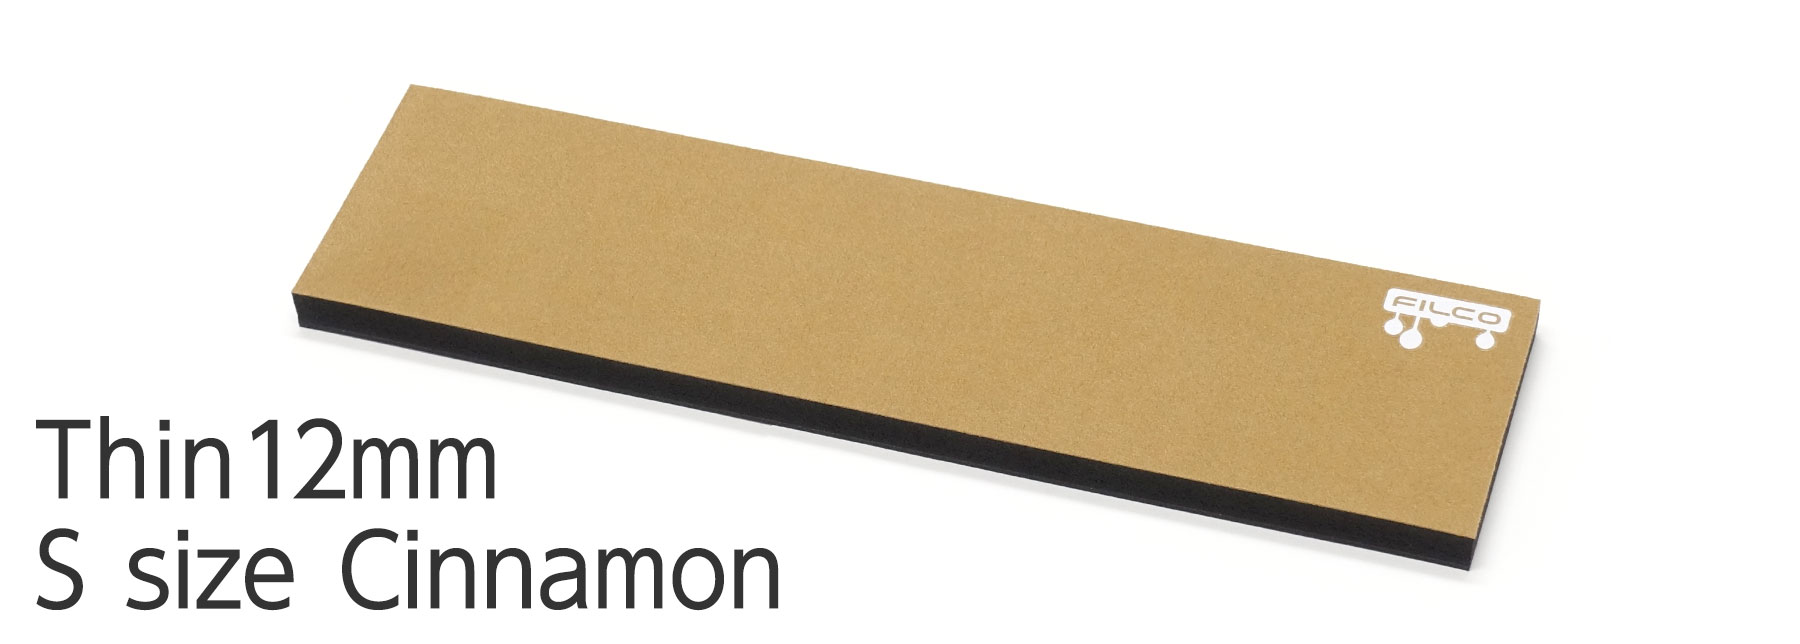 FILCO Majestouch Wrist Rest "Macaron" Thin 12mm / S size / Cinnamon